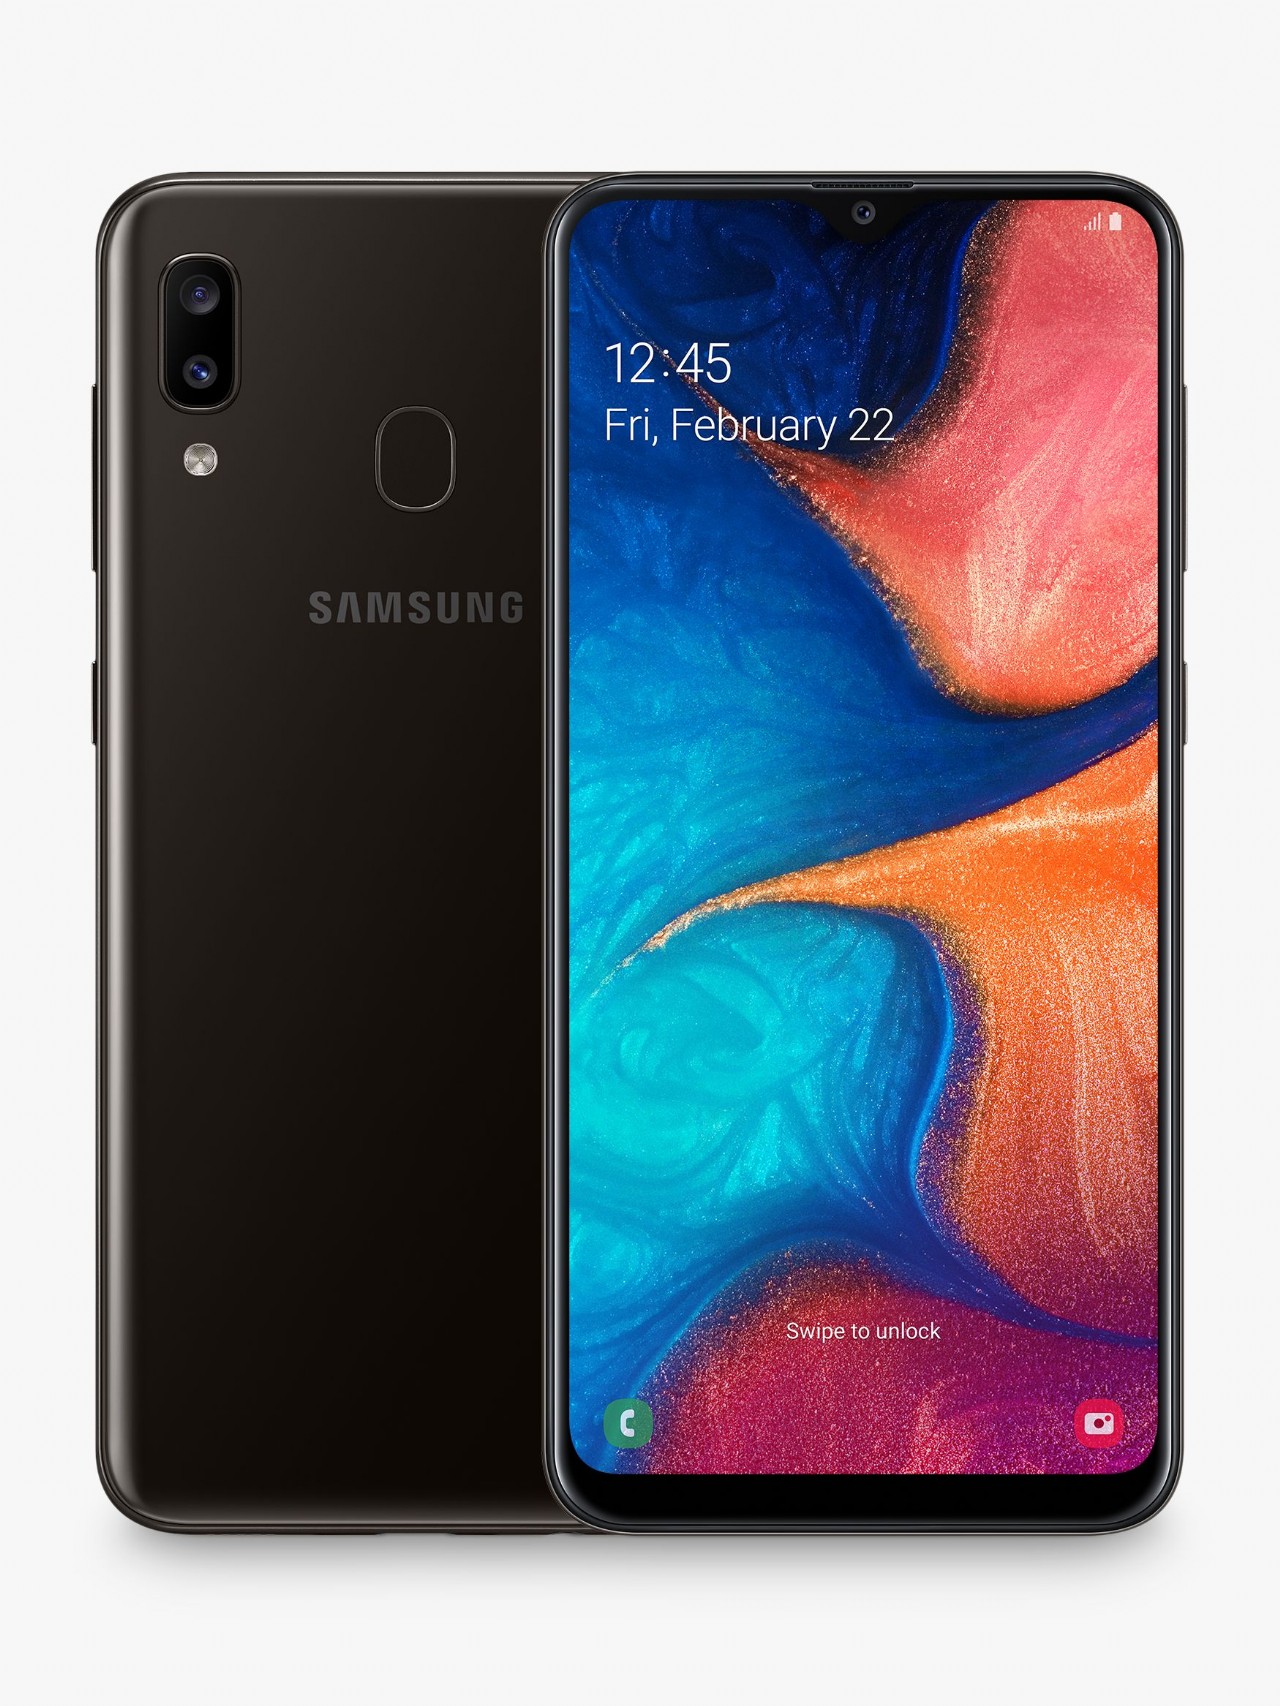 Samsung Galaxy A20e Smartphone, Android, 5.8”, 4G LTE